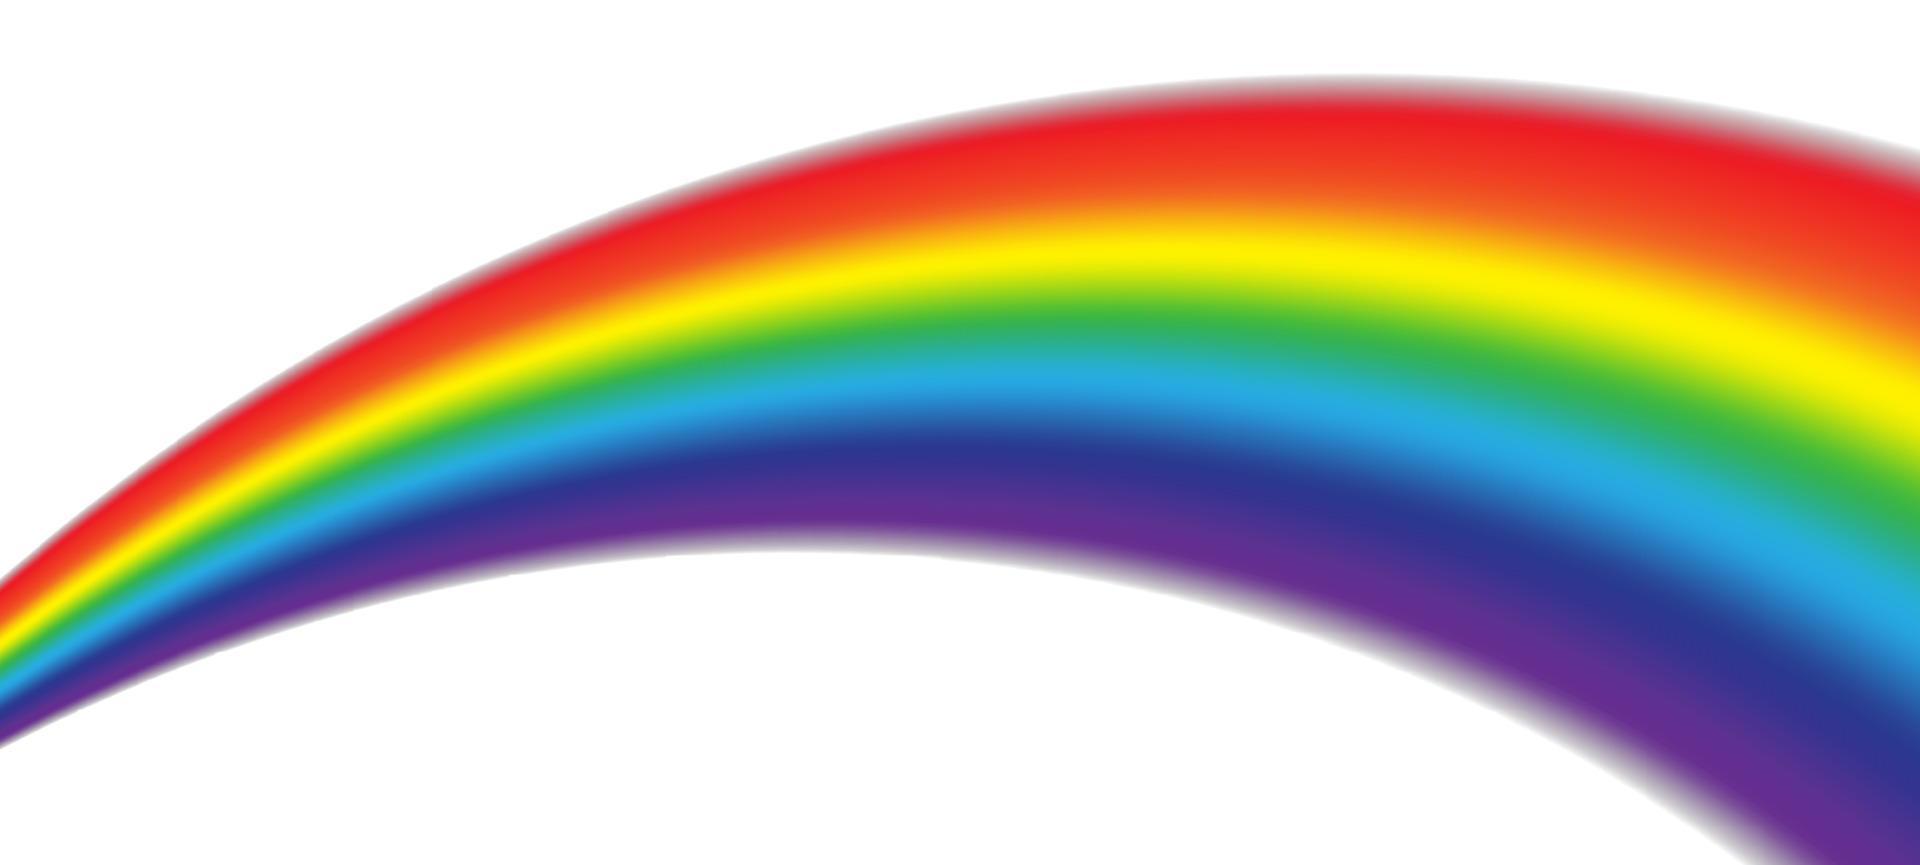 colorido arco-íris multicolorido realista. fenômeno arqueado natural no céu. ilustração vetorial vetor